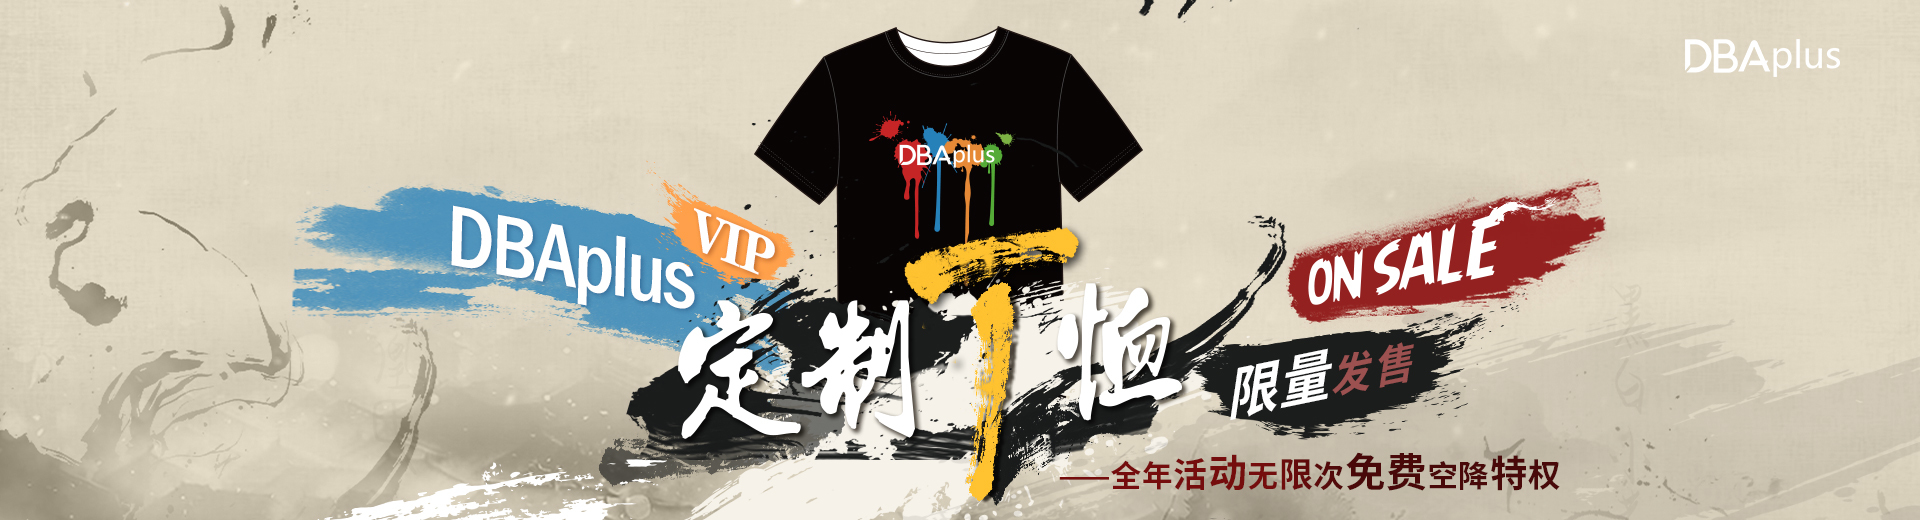 DBAplus社群VIP定制T恤：全年活动无限次免费空降特权